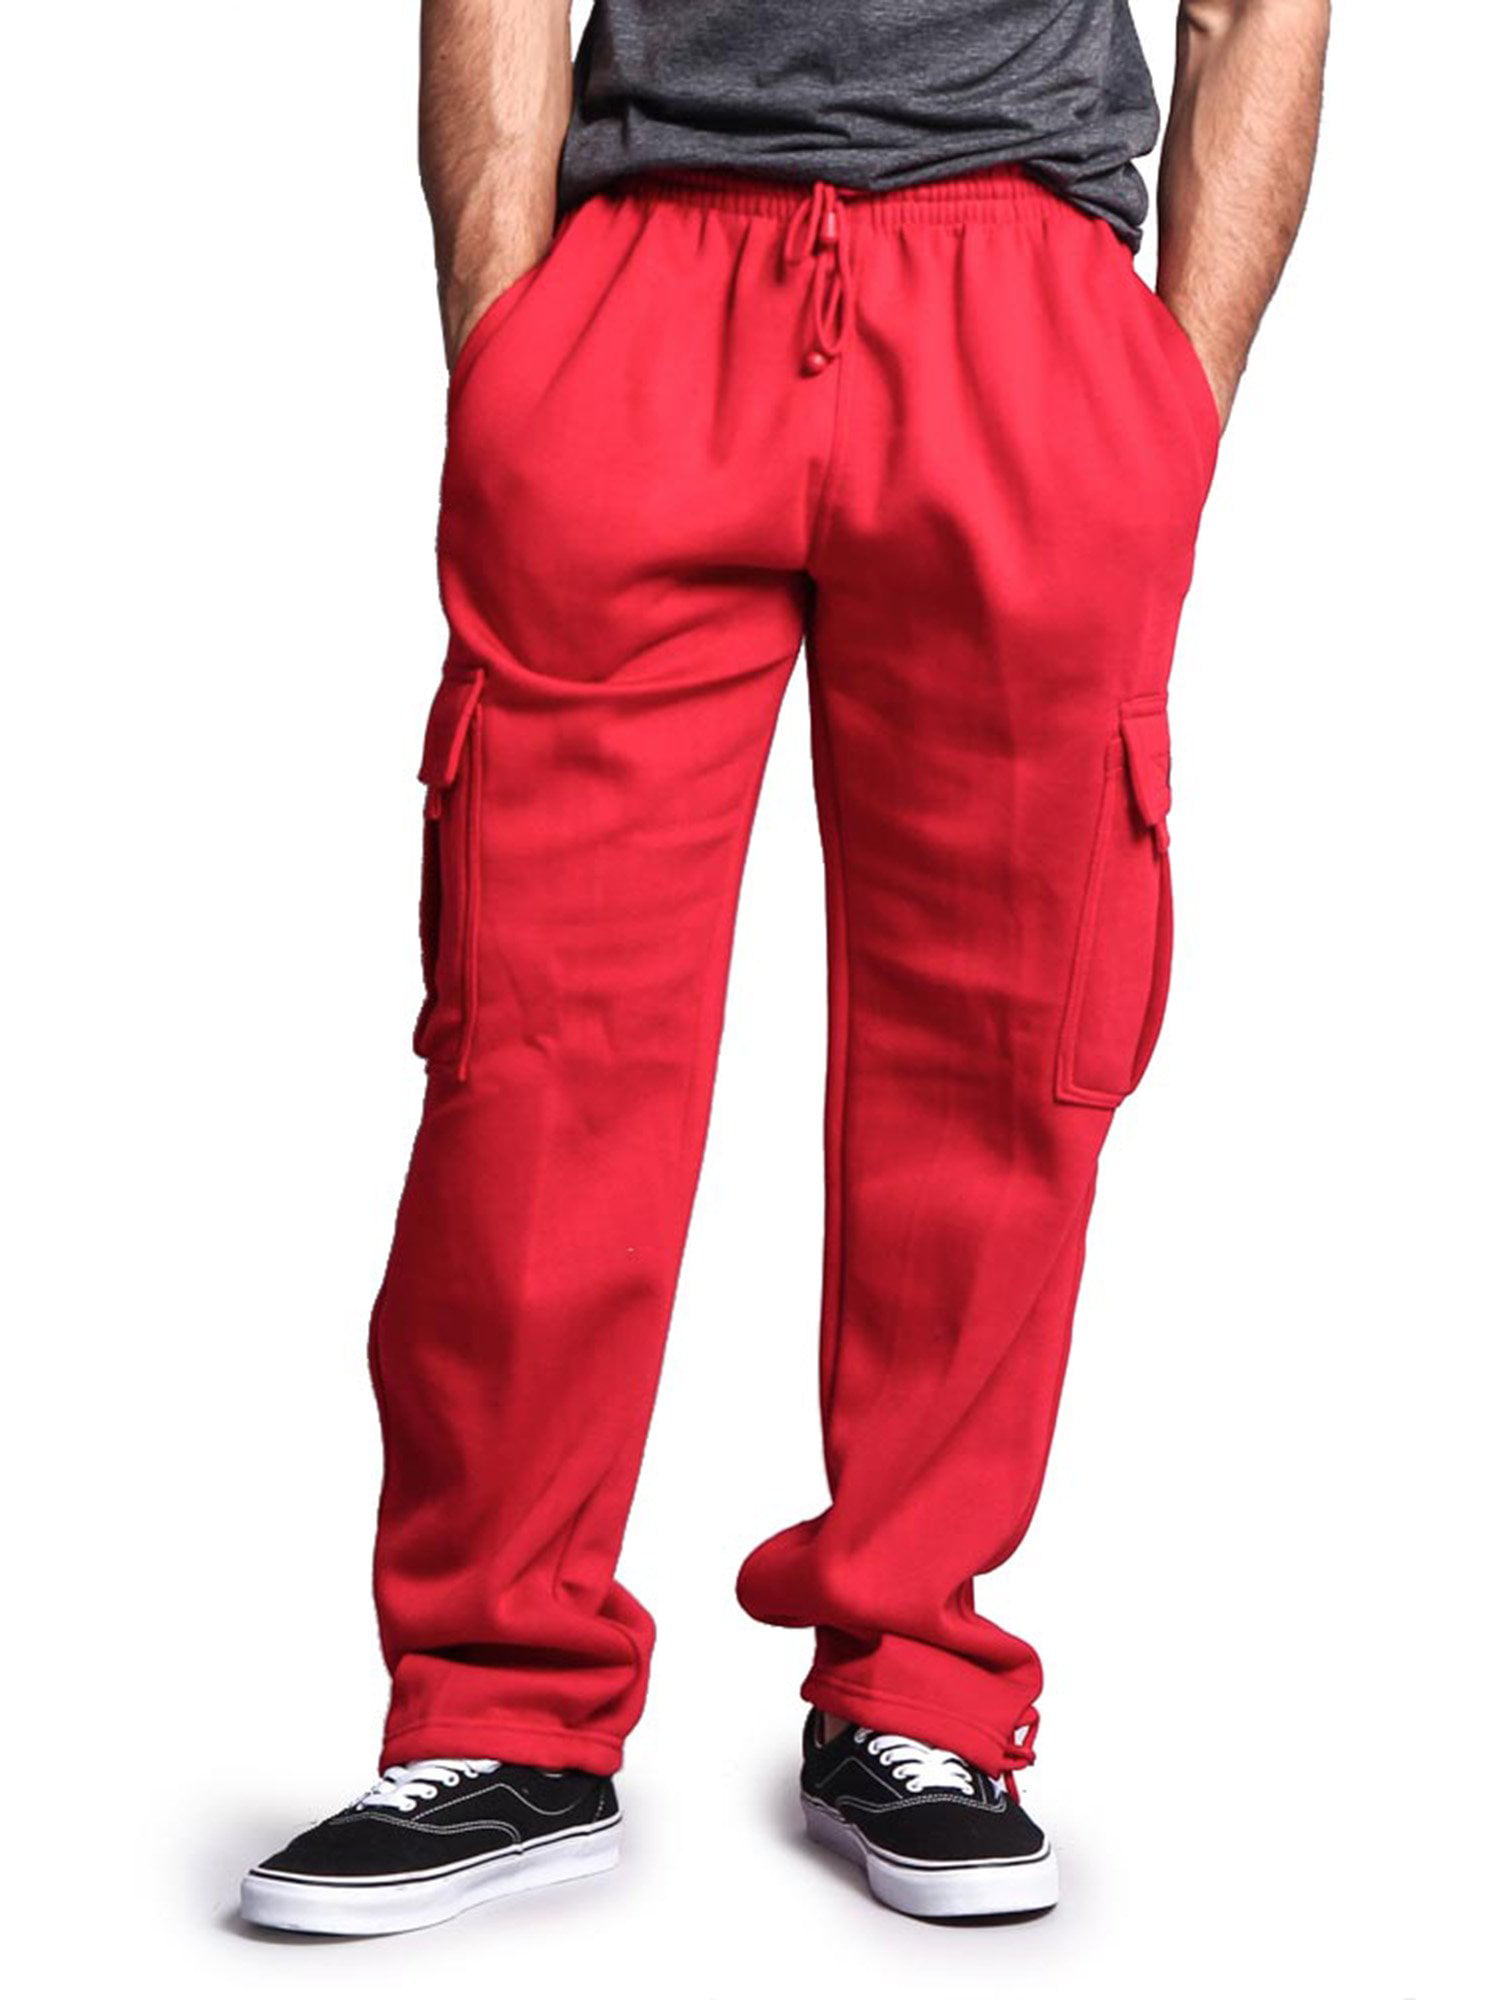 G-Style USA Men's Solid Fleece Cargo Pants DFP2 - RED - Large - Walmart.com